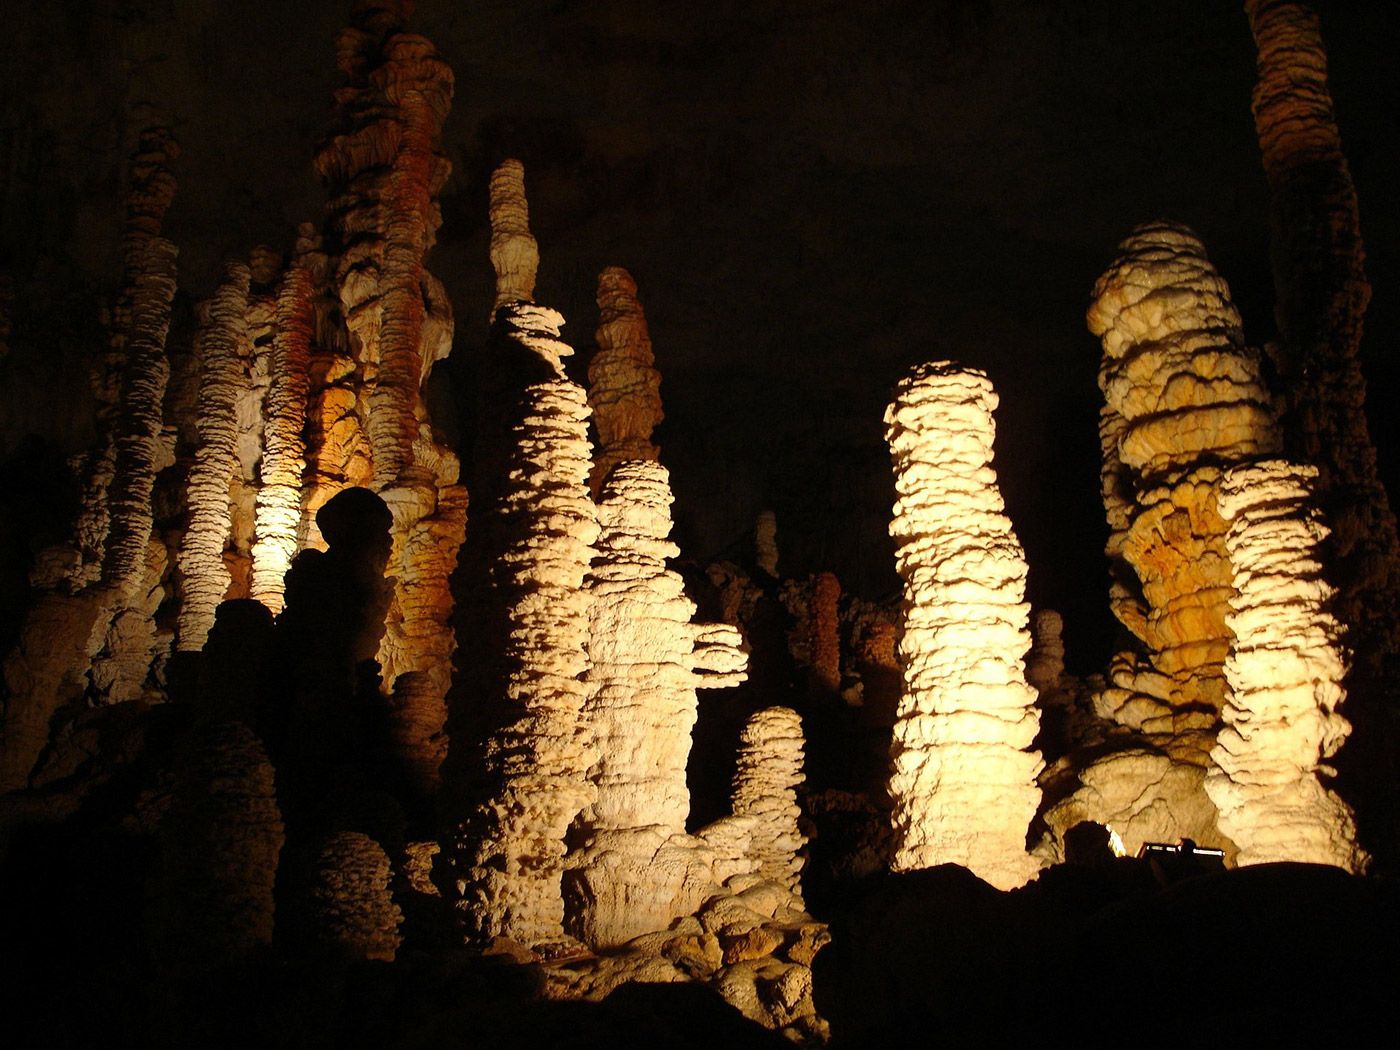 Aven d'Orgnac Cave